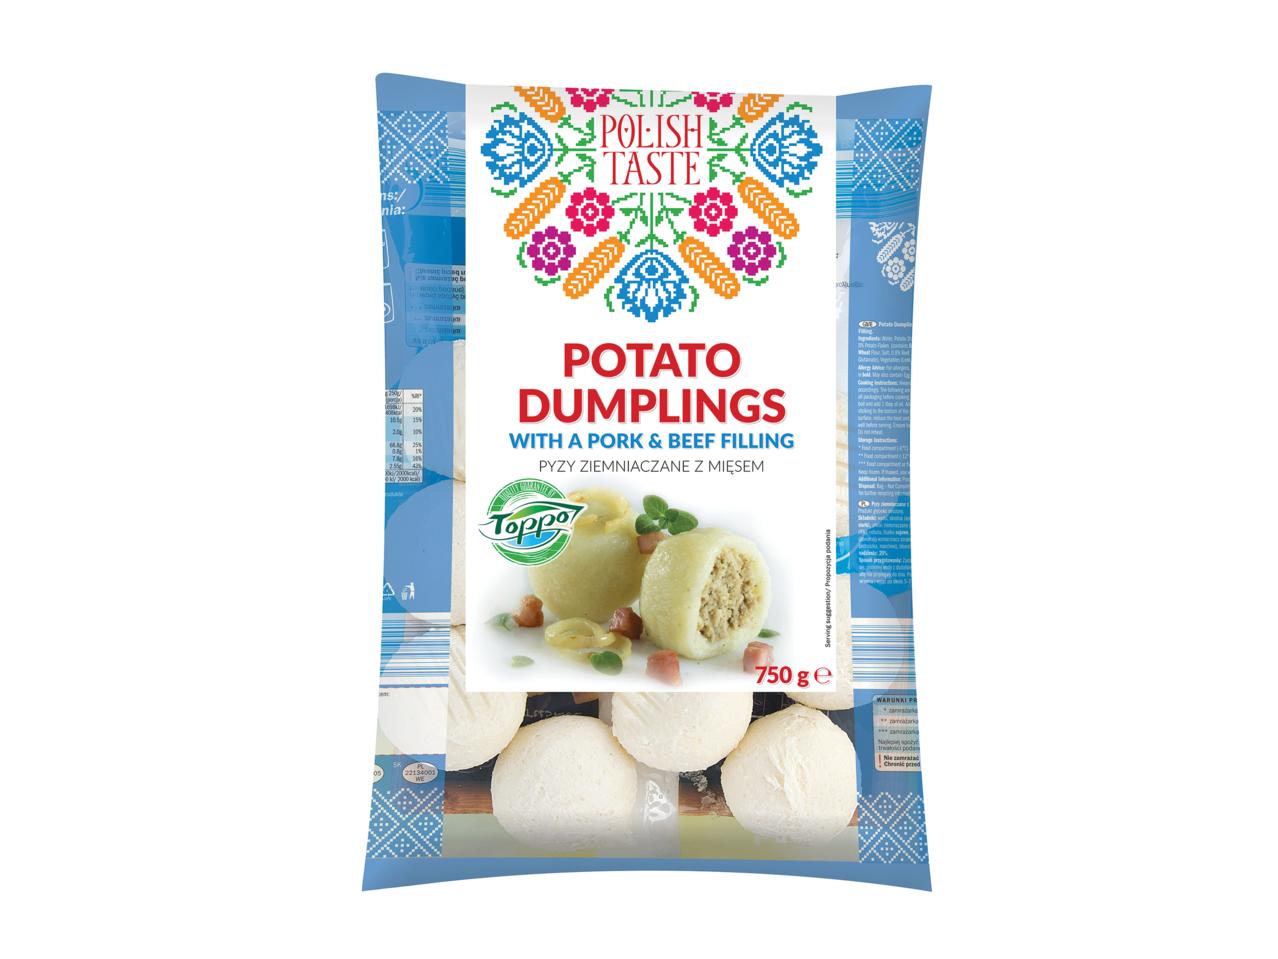 POLISH TASTE Dumplings/Potato Dumplings